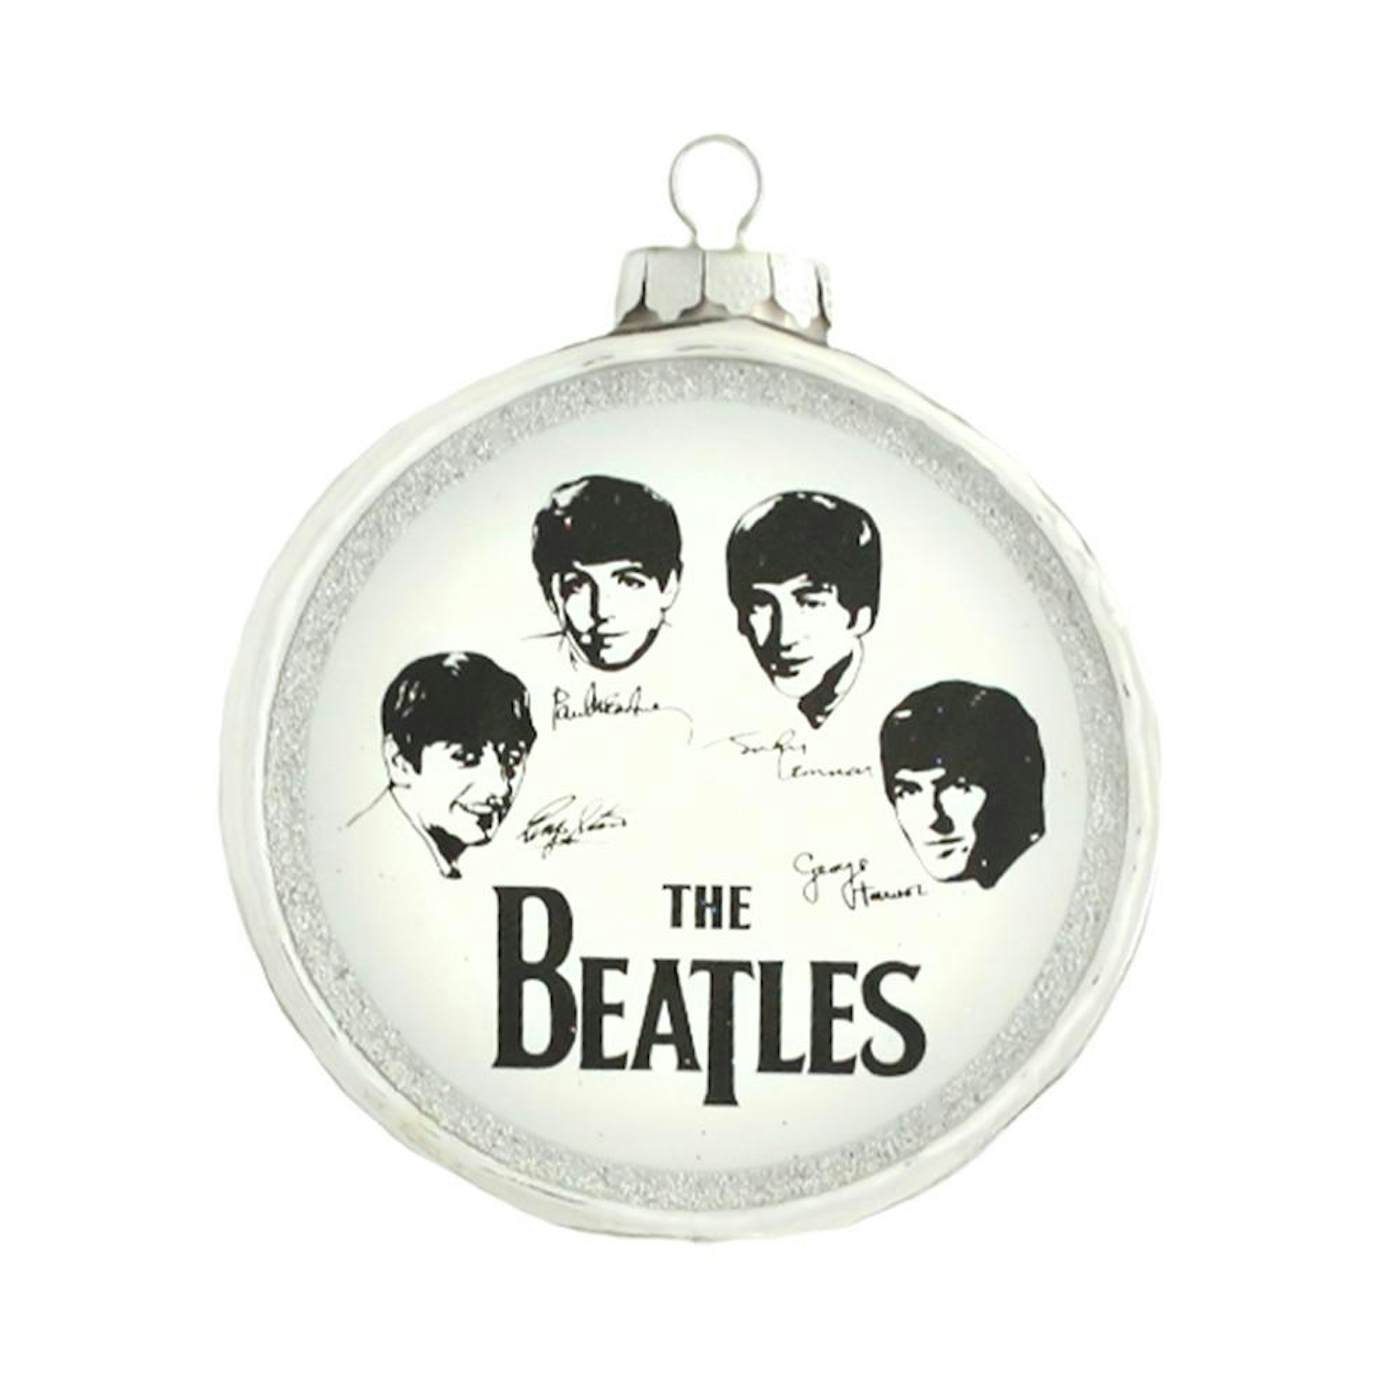 The Beatles Beatlemania Ornament